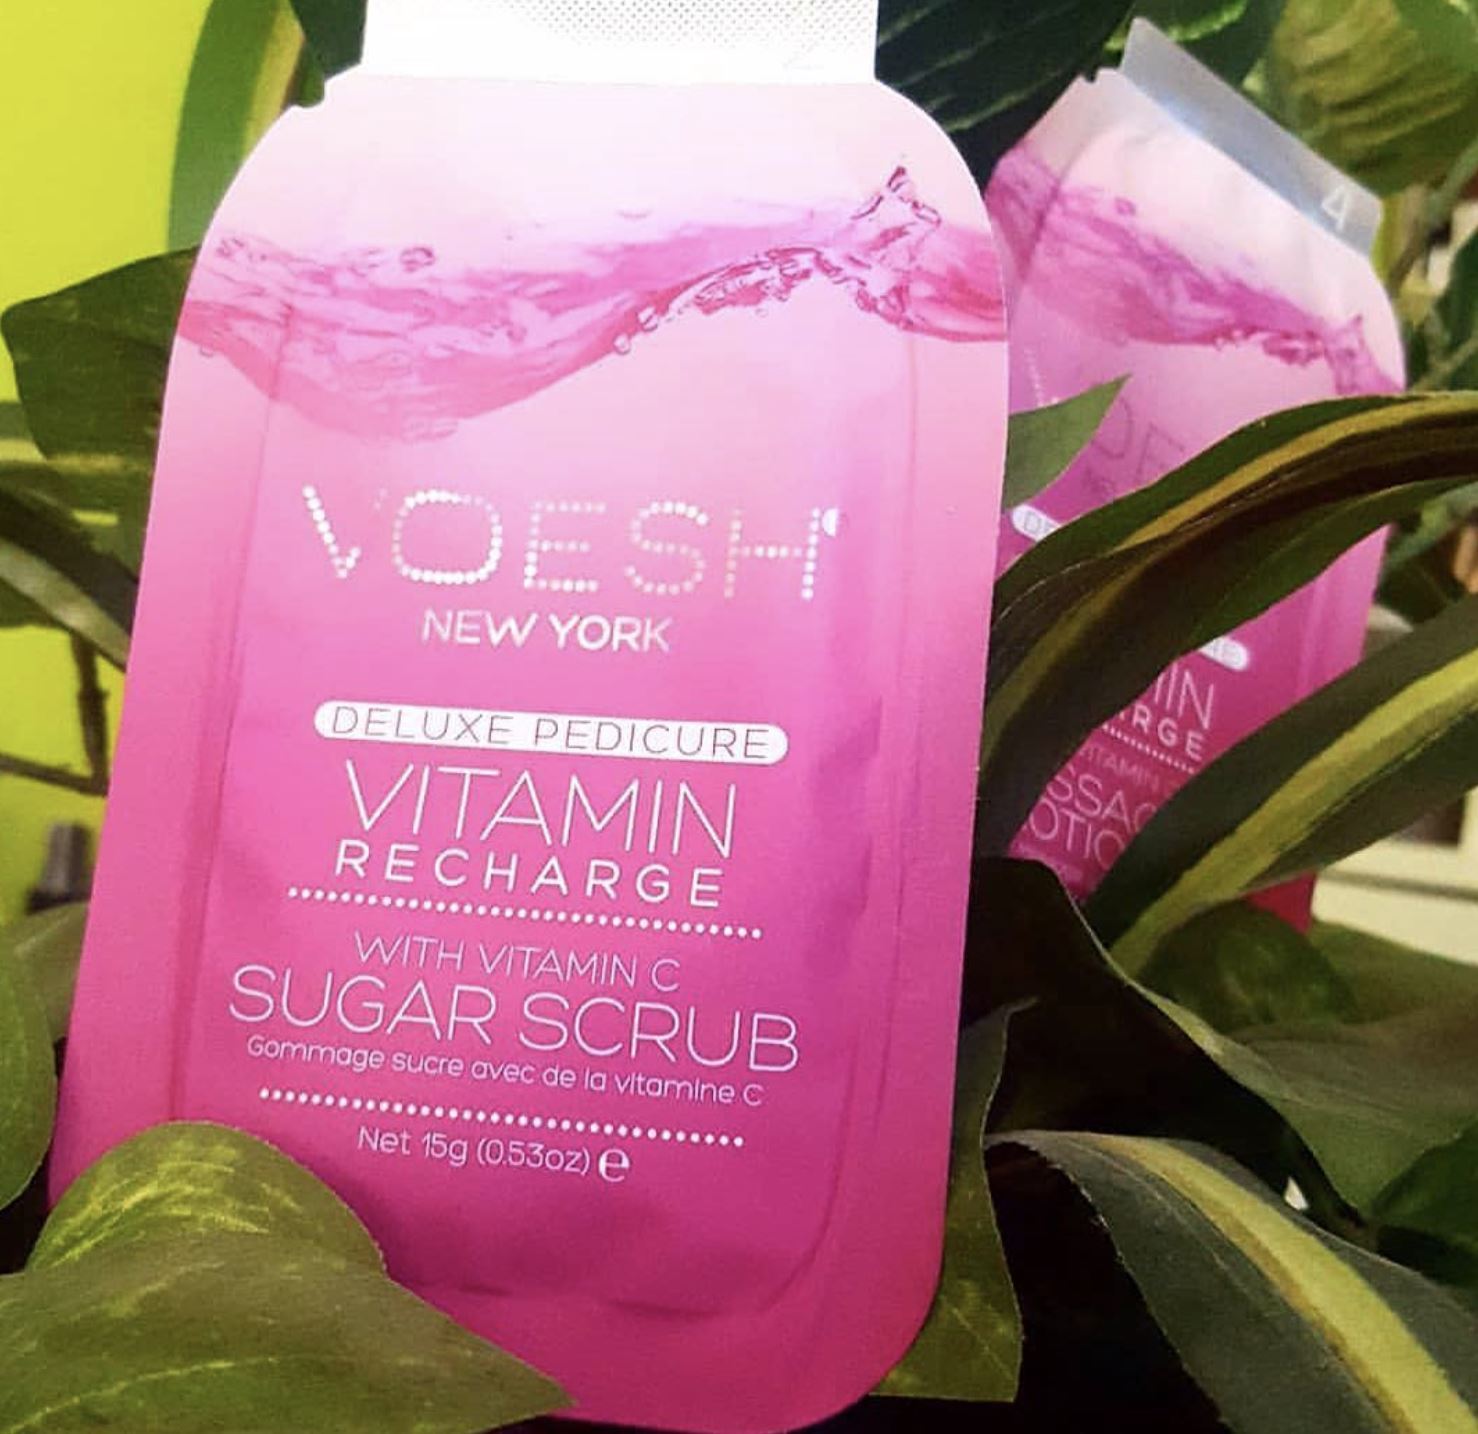 Pedi-in-a-Box Vitamin Recharge - Voesh - NSI Australia